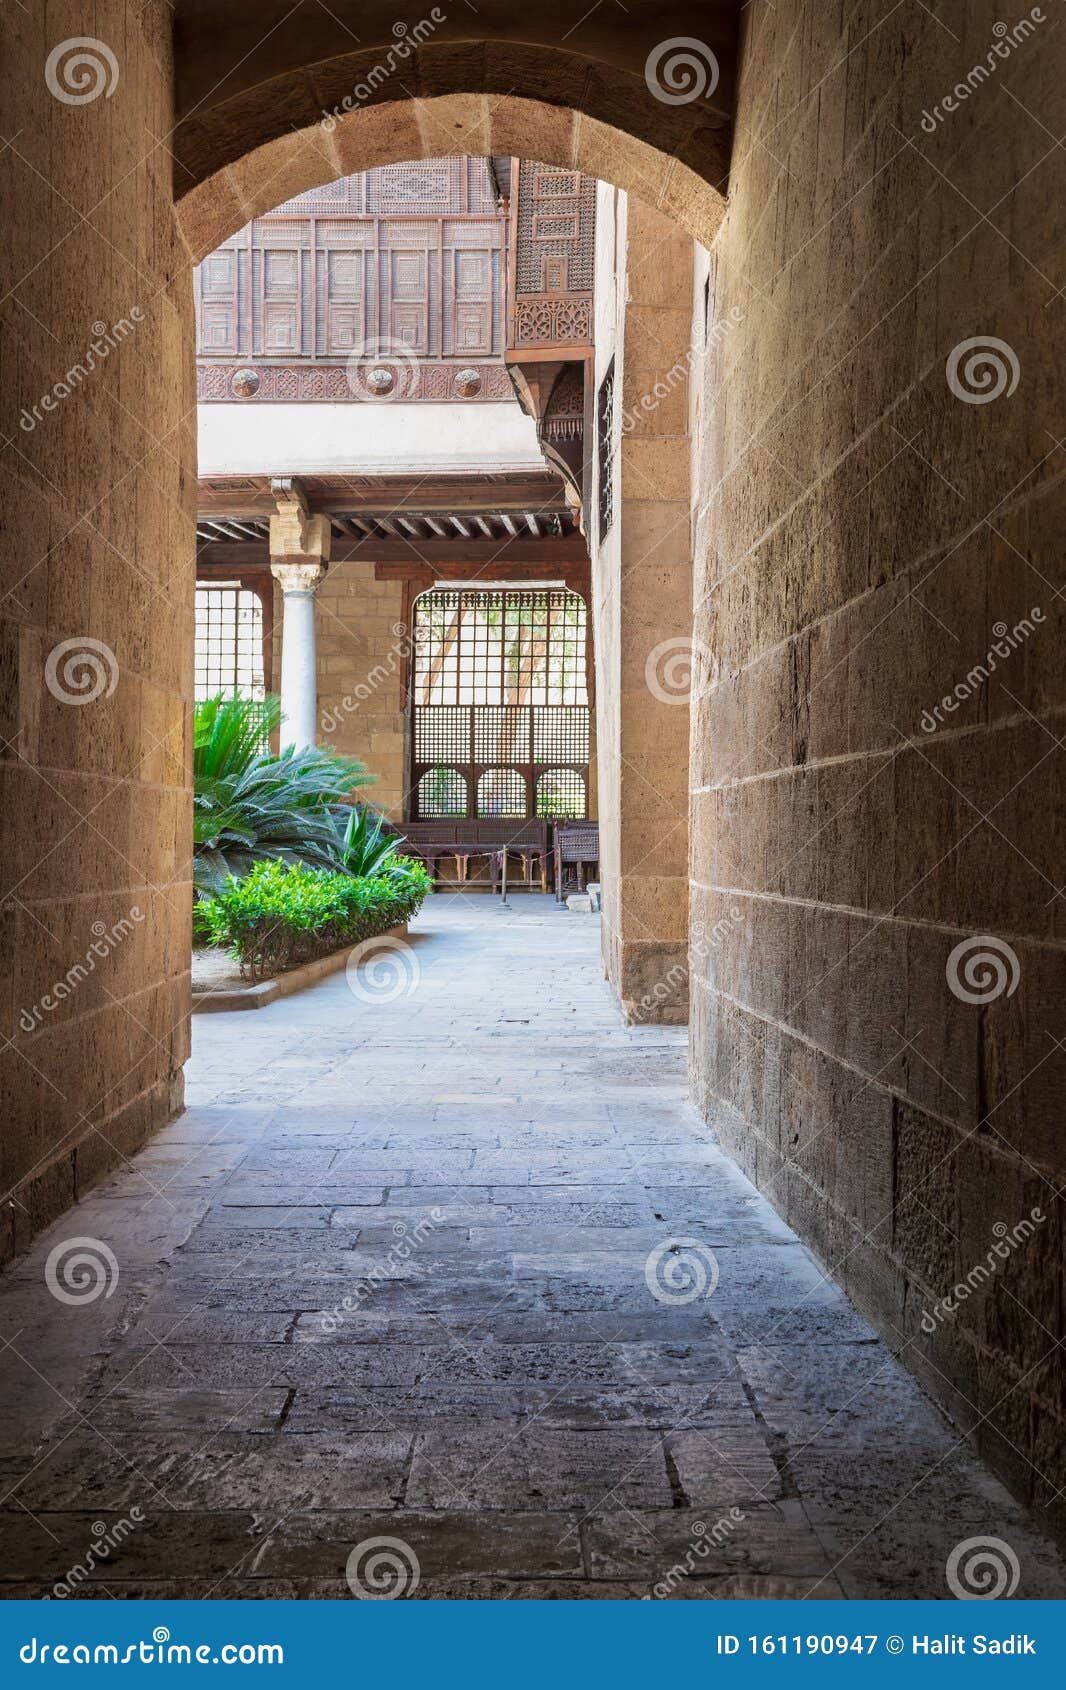 stone bricks vaulted entrance of historic beit el sehemy house, cairo, egypt